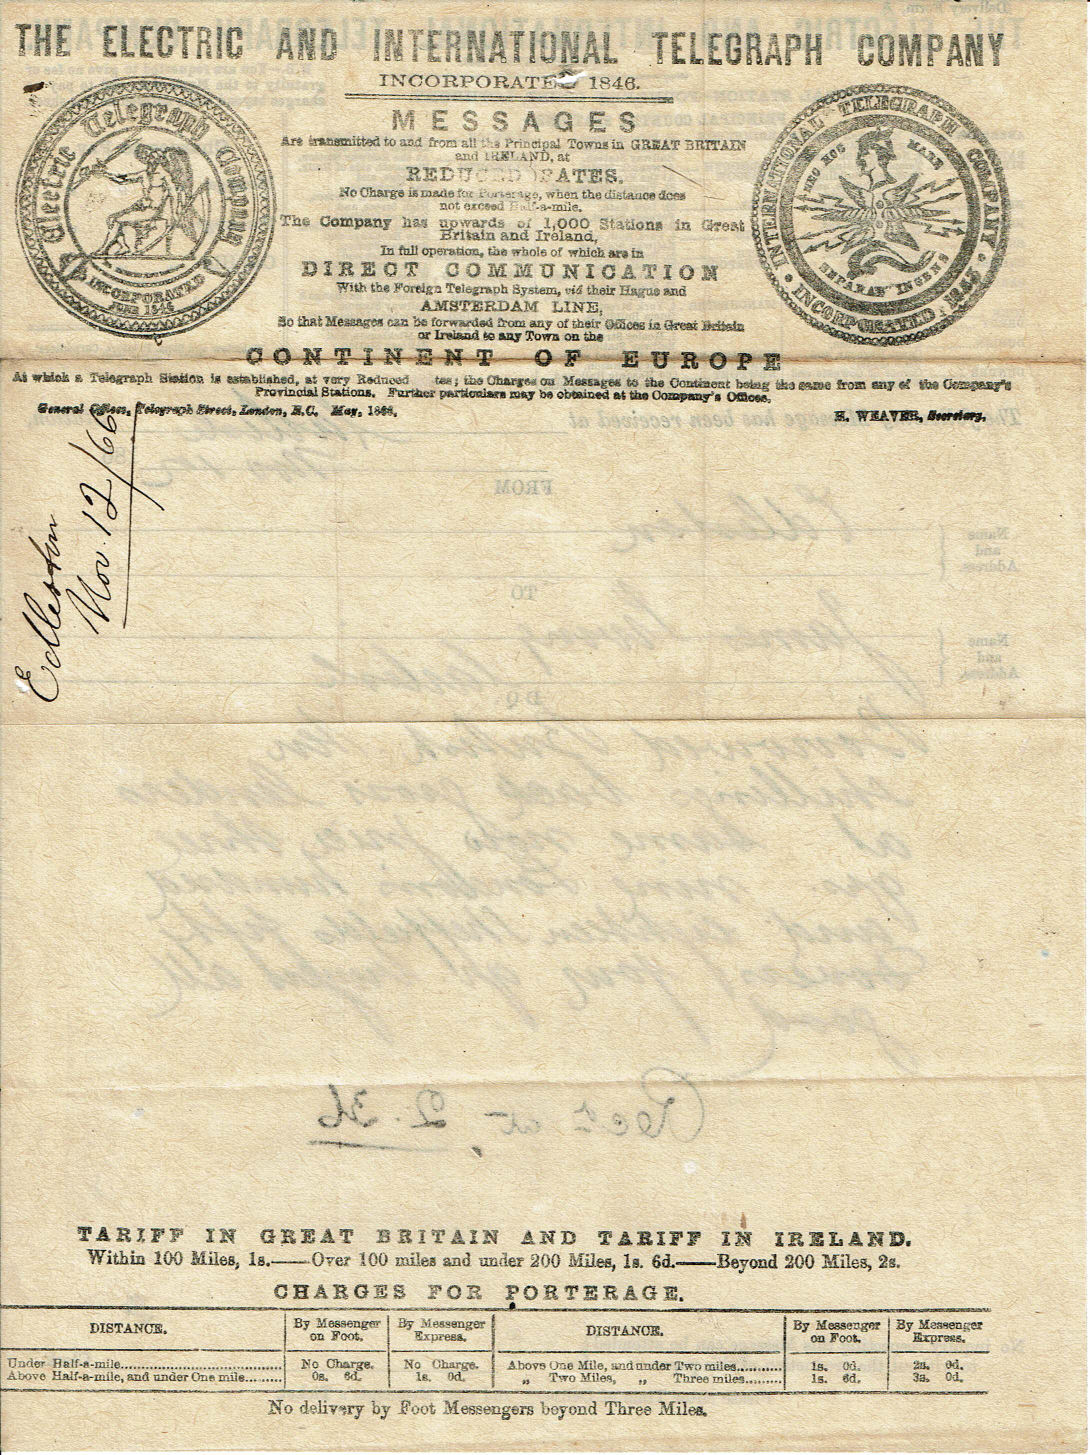 Electric Telegraph Company 1866 Form A - back.